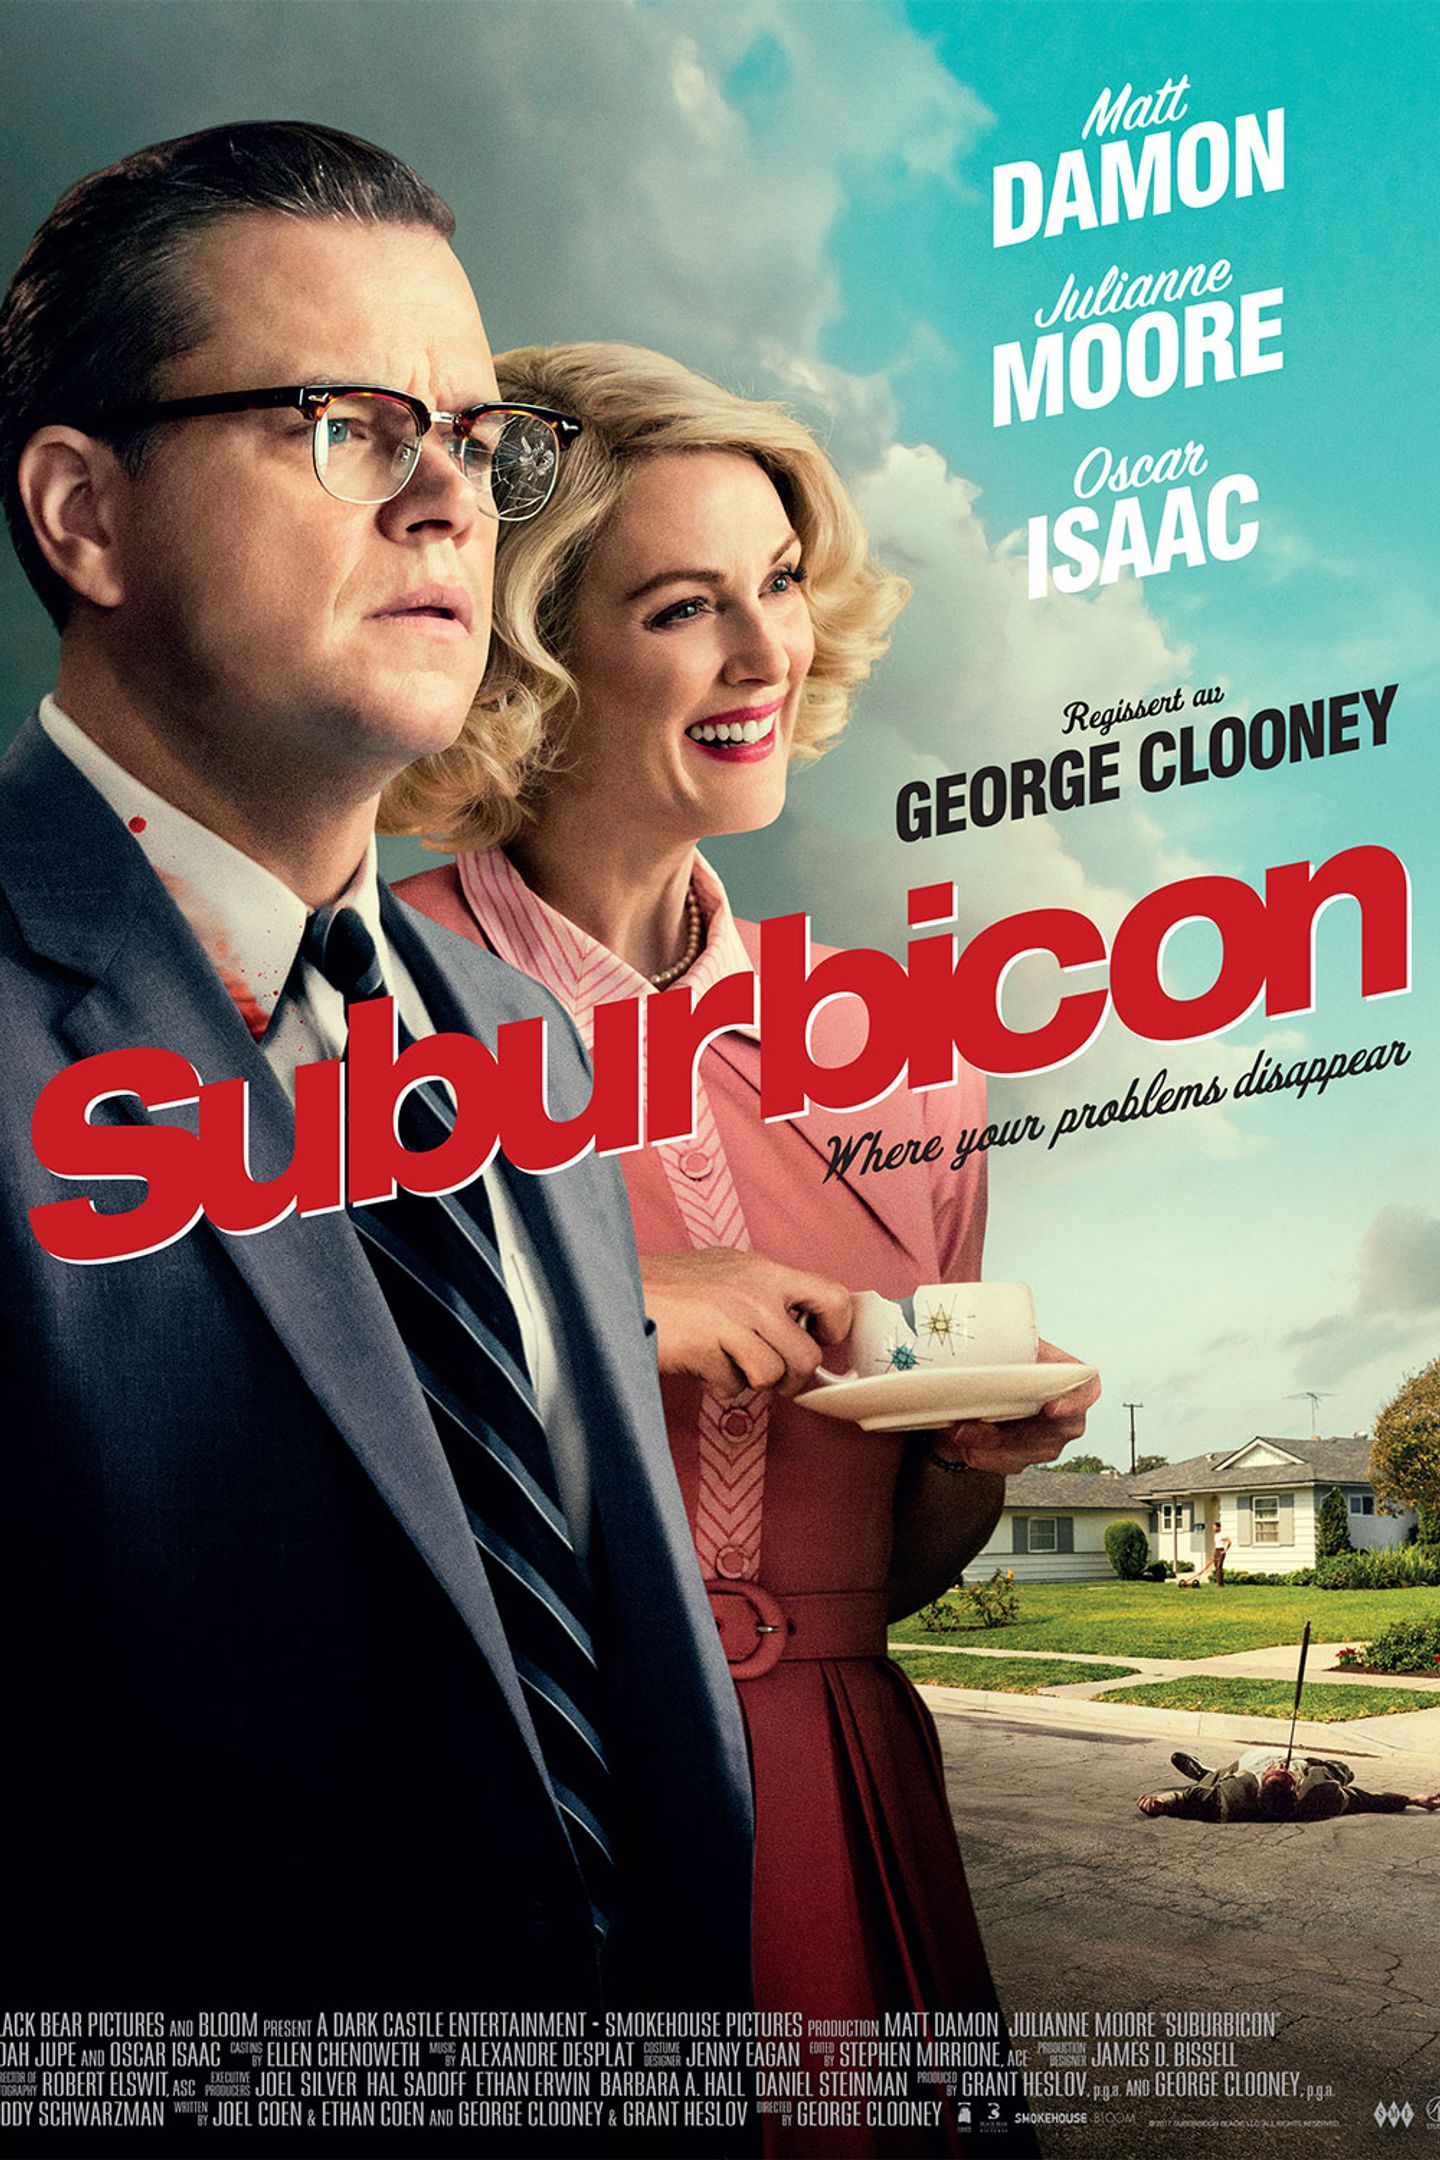 Plakat for 'Suburbicon'